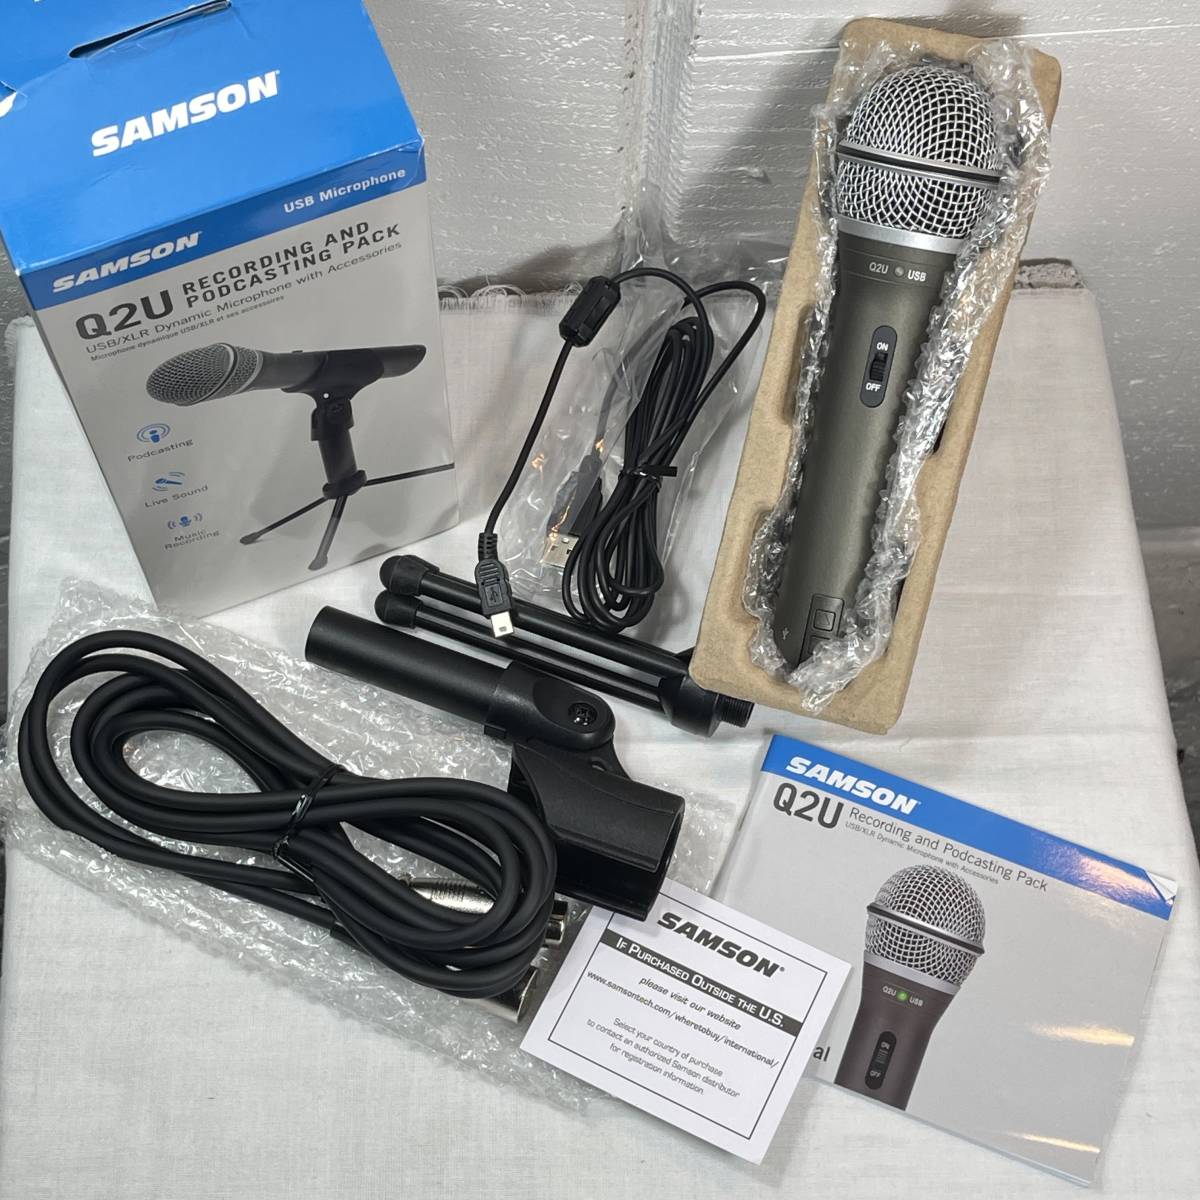 SAMSON Q2U USB Microphone RECORDING AND PODCASTING PACK マイク 箱付き USED品 1円スタート_画像4